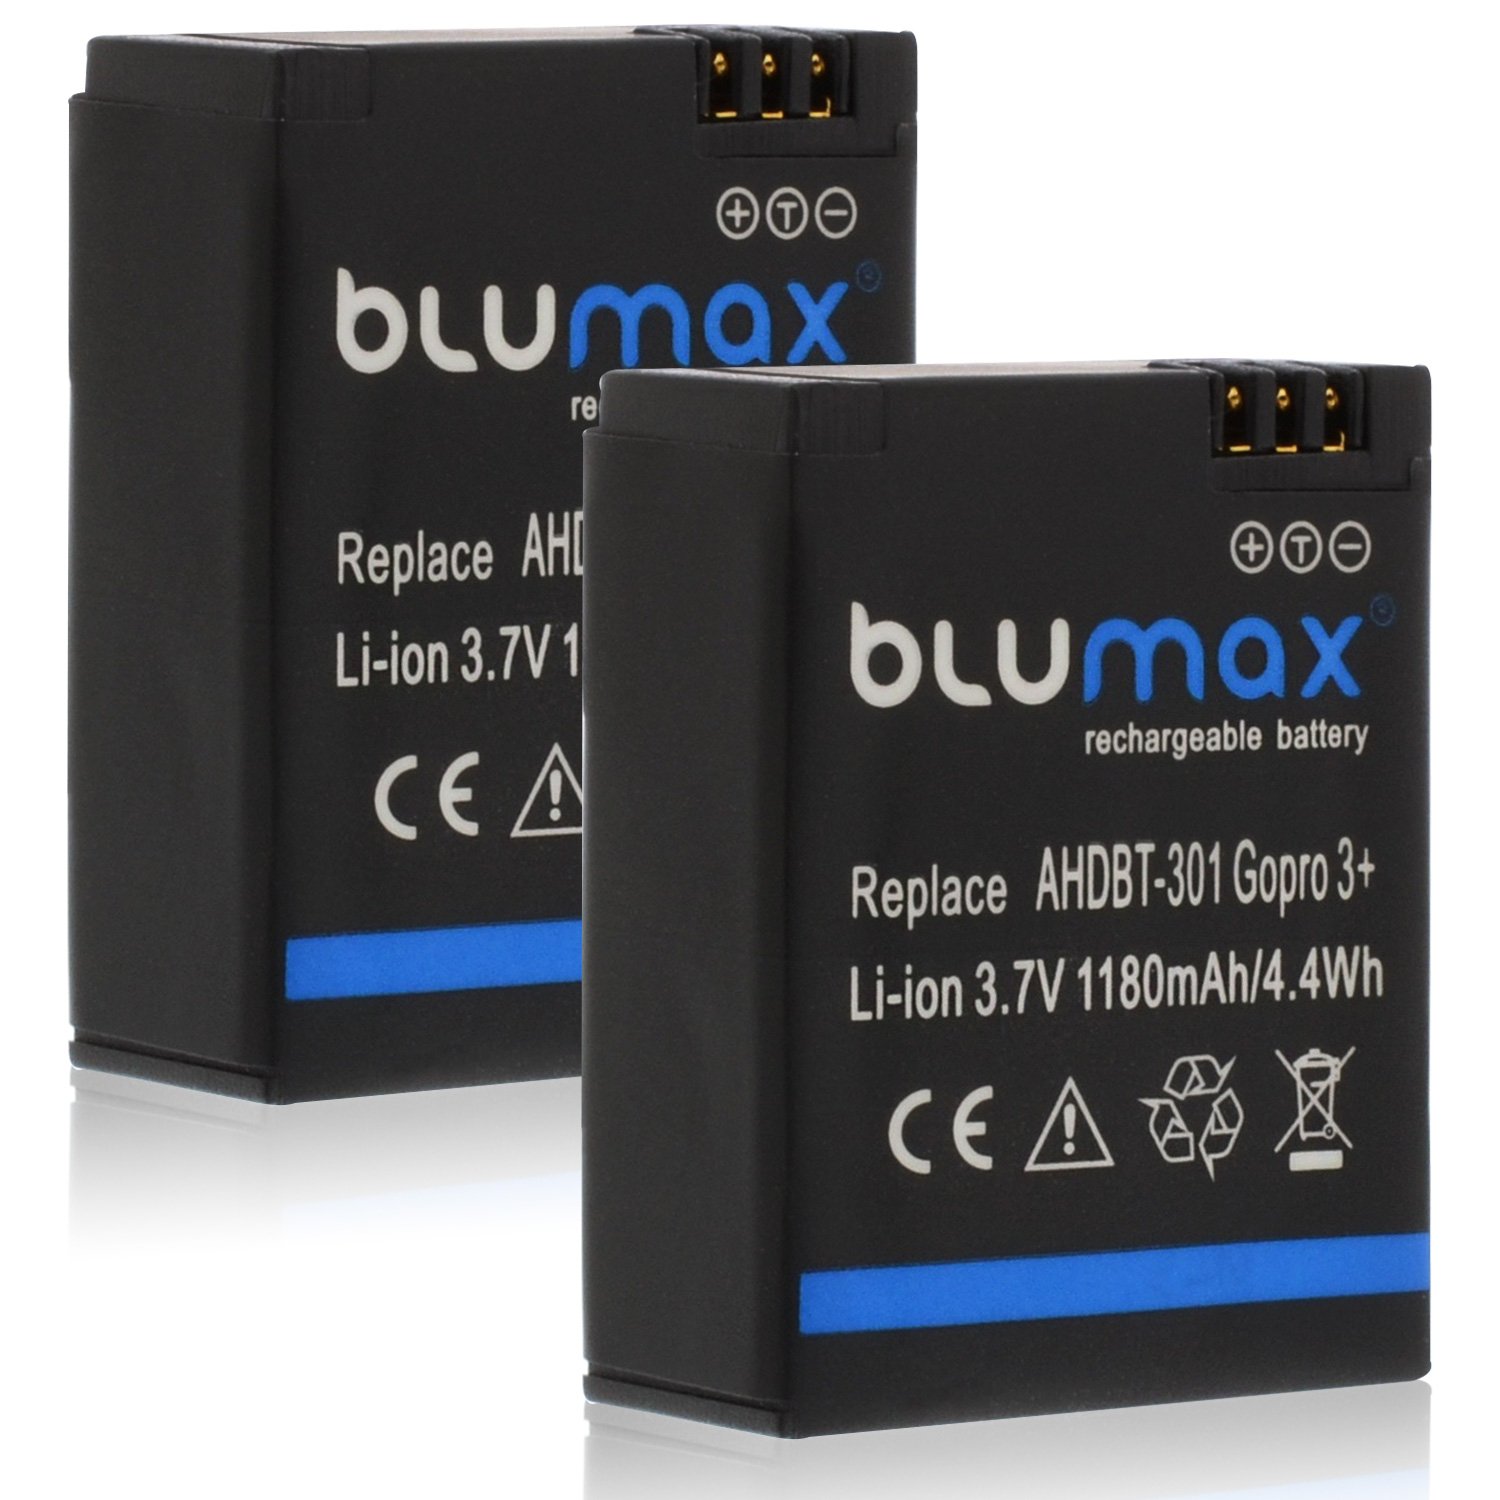 Blumax 2X Akku 1180mAh - ersetzt GoPro Hero 3 Plus 3+ / 3 Black, Silver, White - AHDBT-201, AHDBT-301, AHDBT-302, AHBBP-301, ACARC-001, AWALC-001